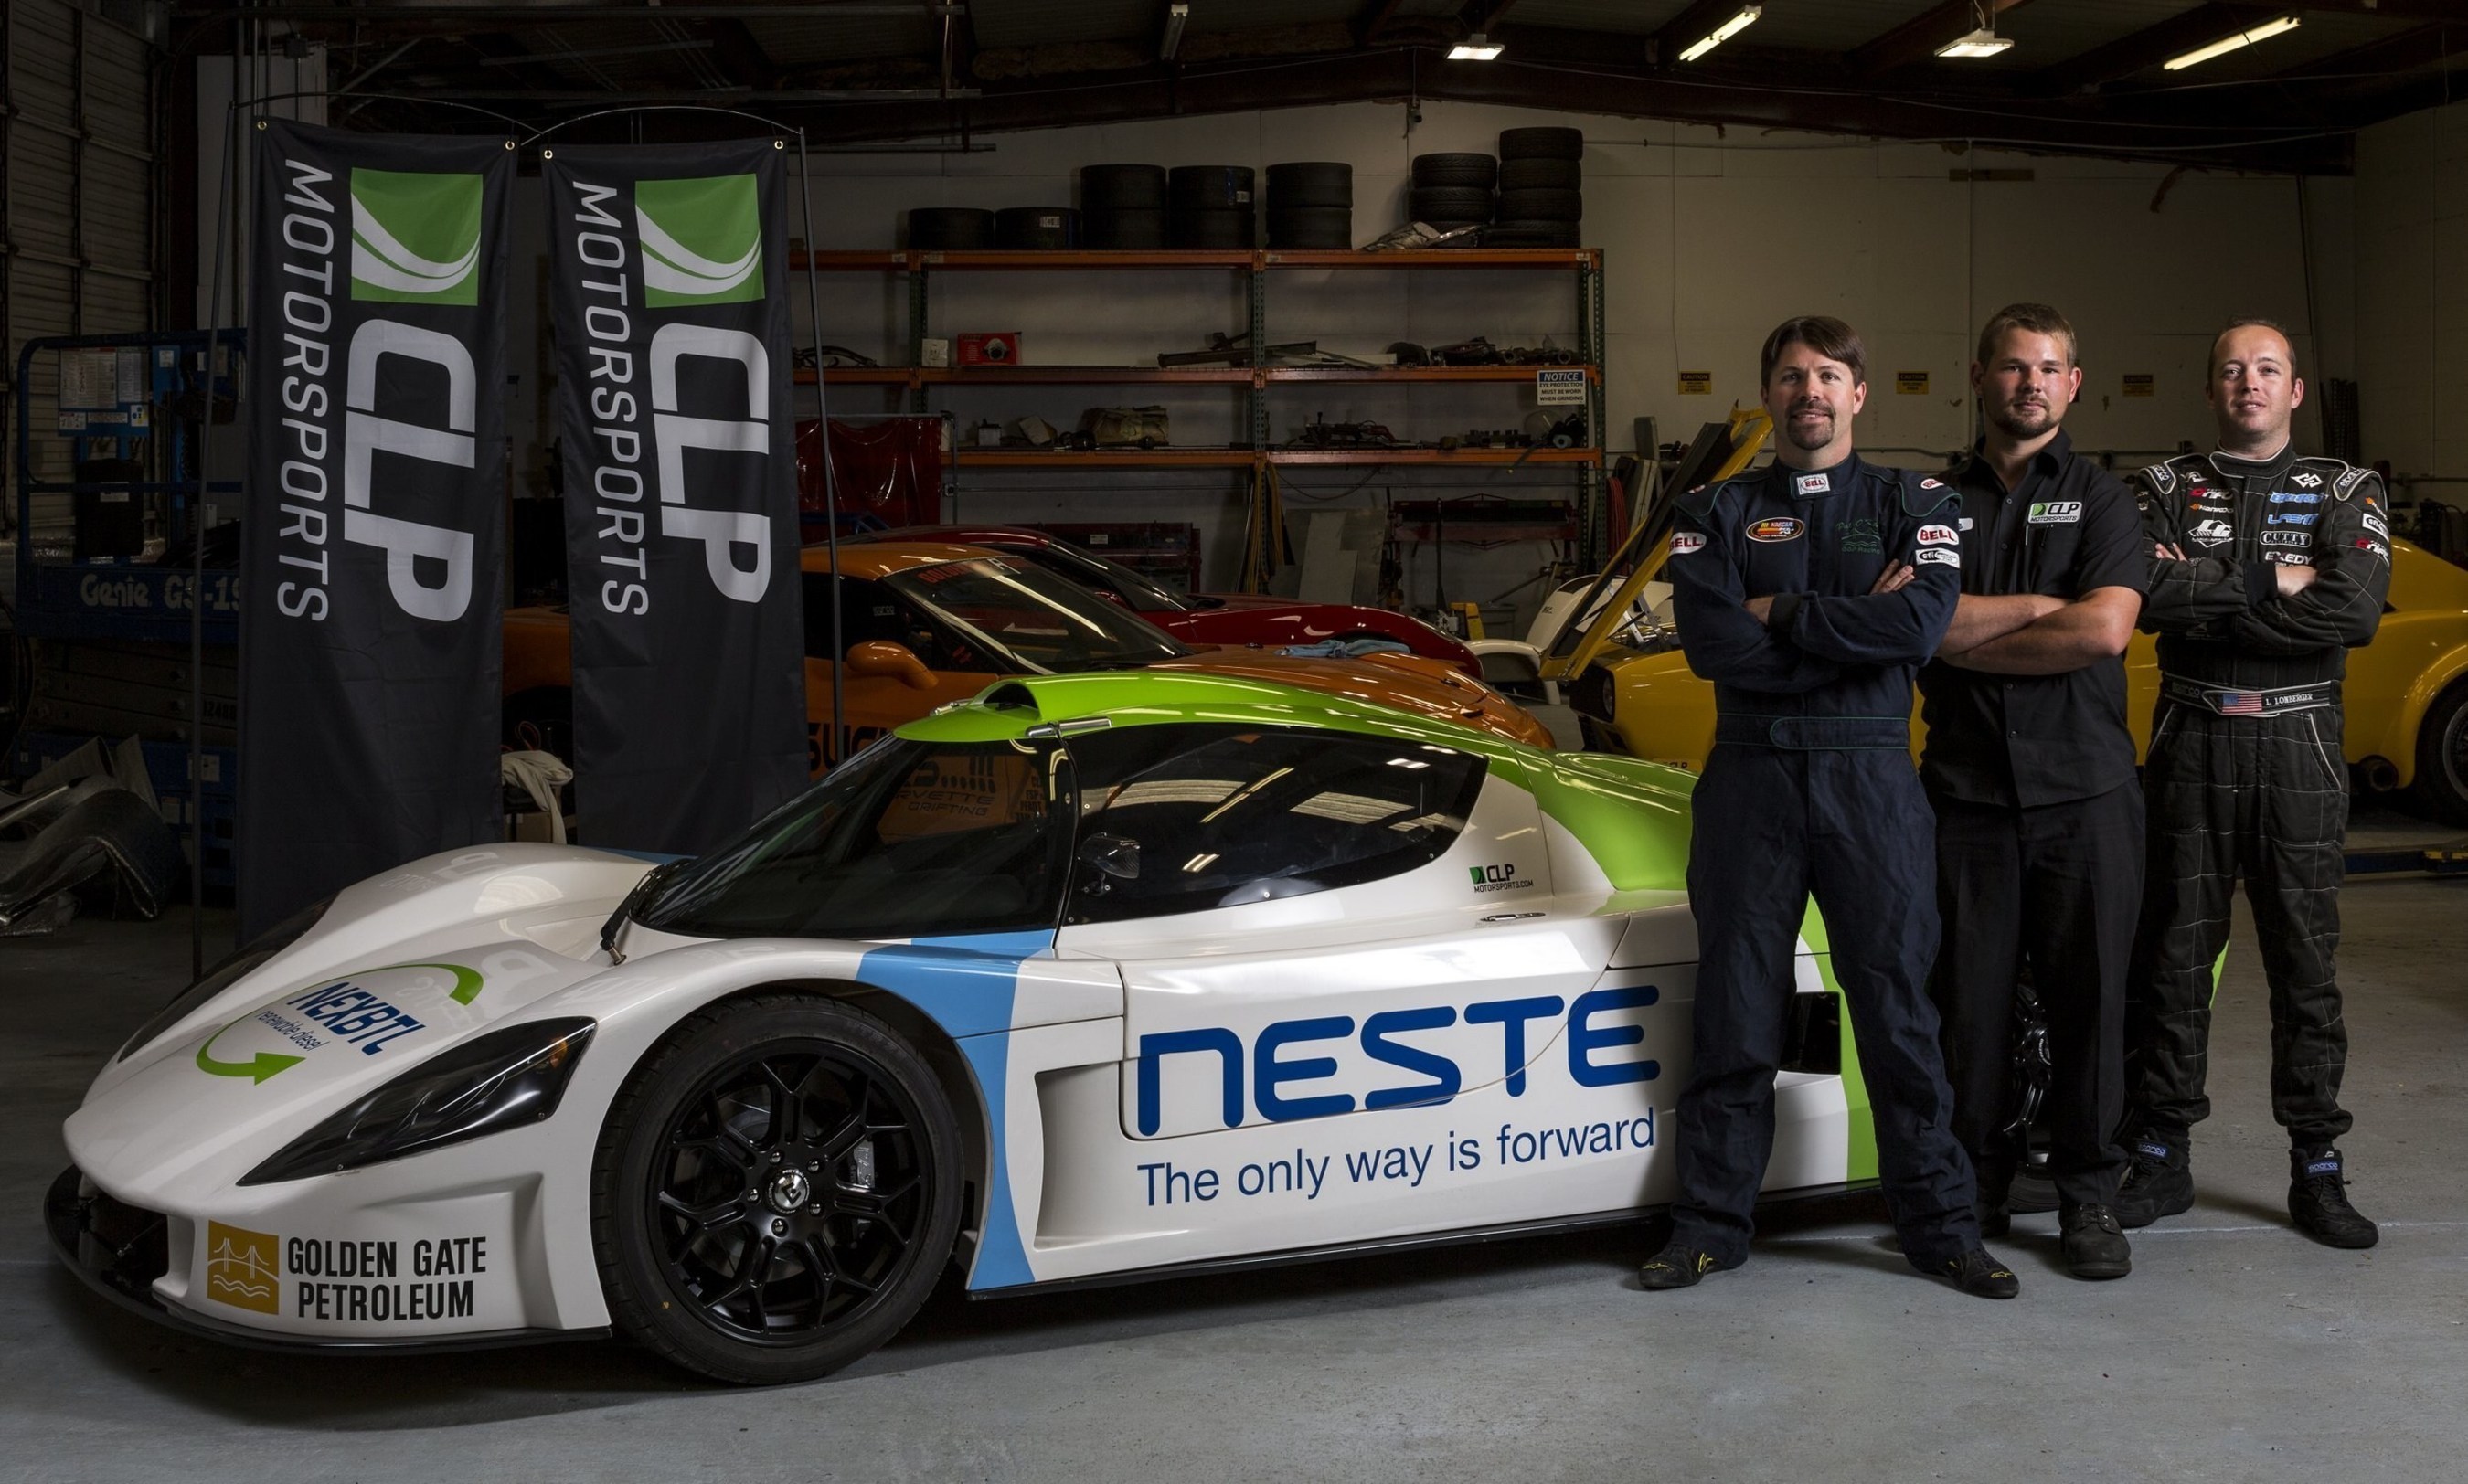 Neste's One Tank Across the USA - CLP Motorsports Team